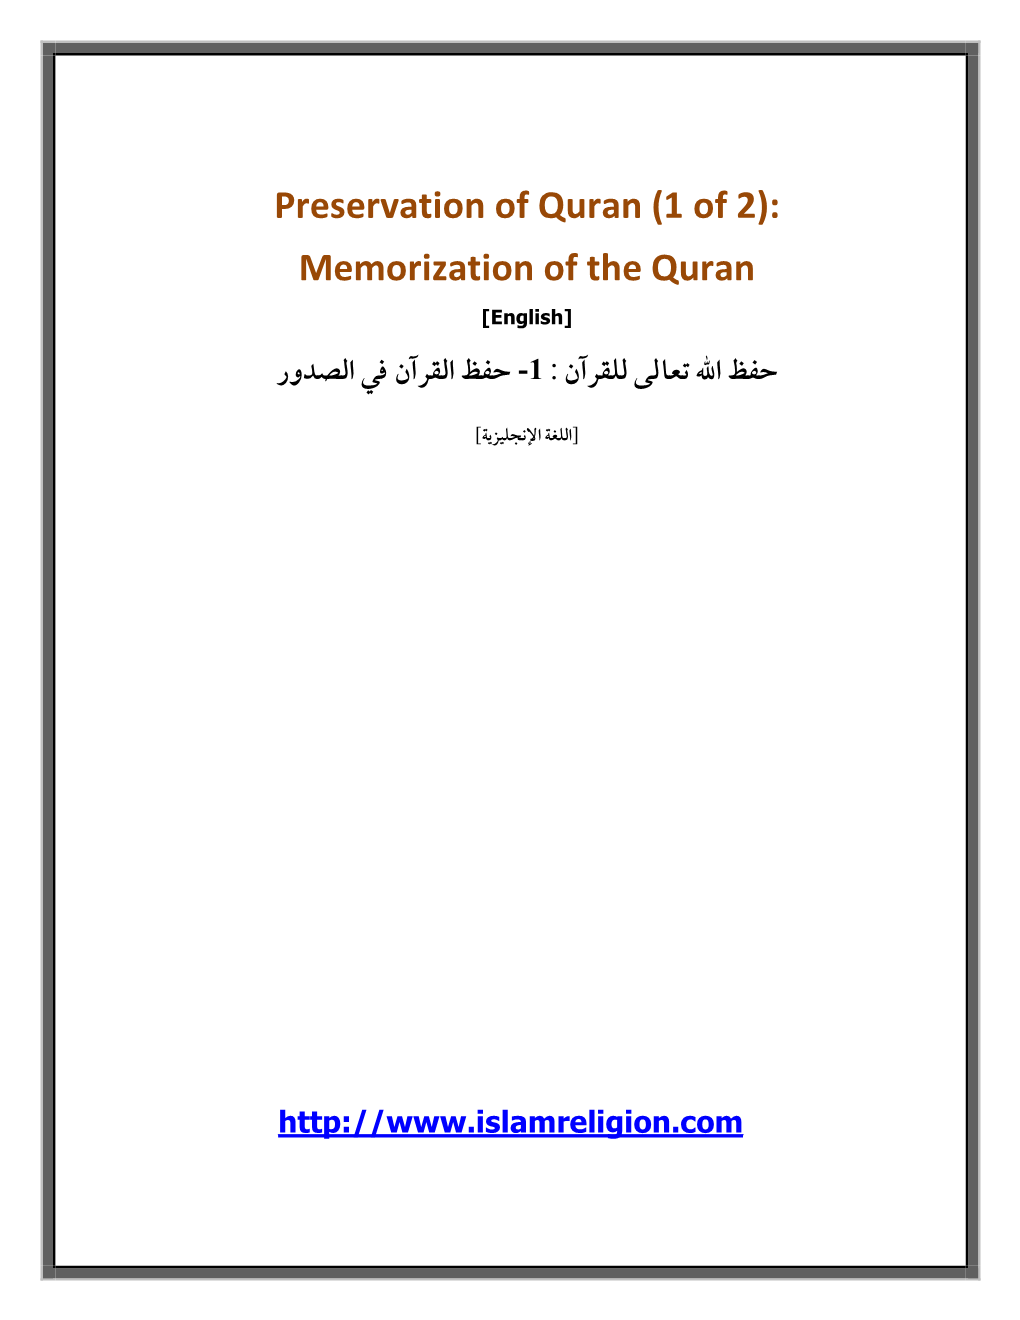 Preservation of Quran (Part 1 of 2): Memorization of the Quran